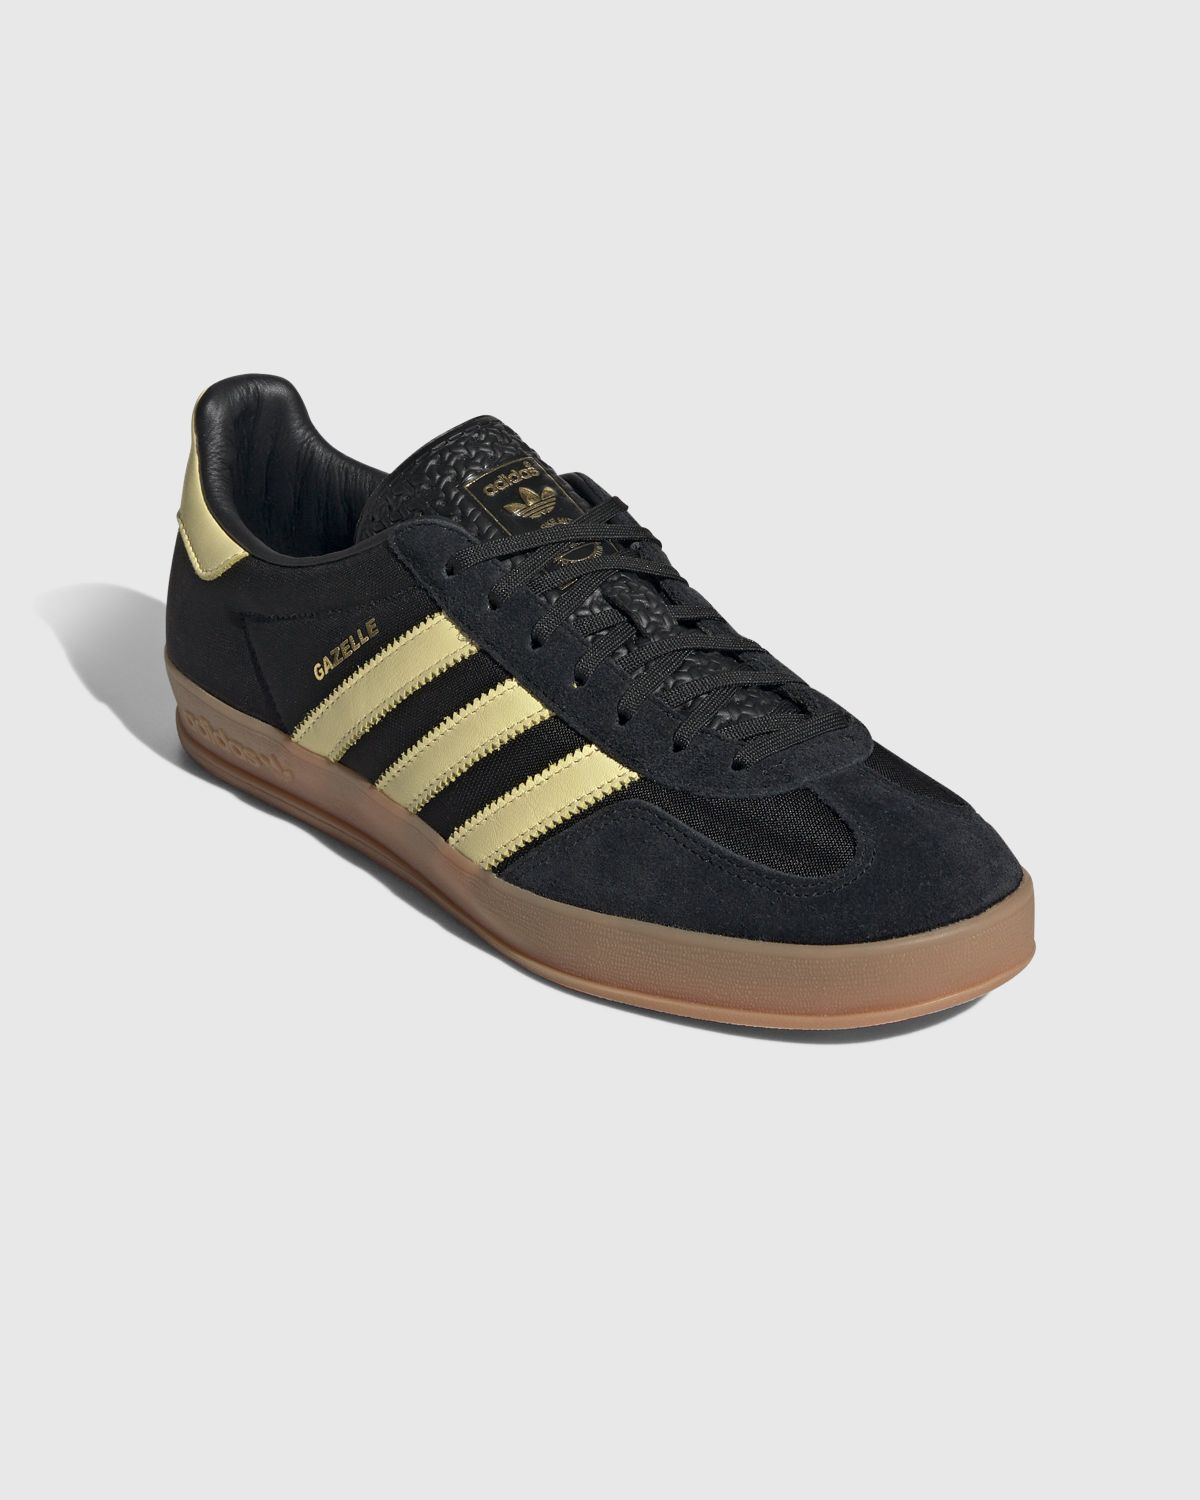 Adidas – Gazelle Core Black/Gum - Sneakers - Black - Image 3